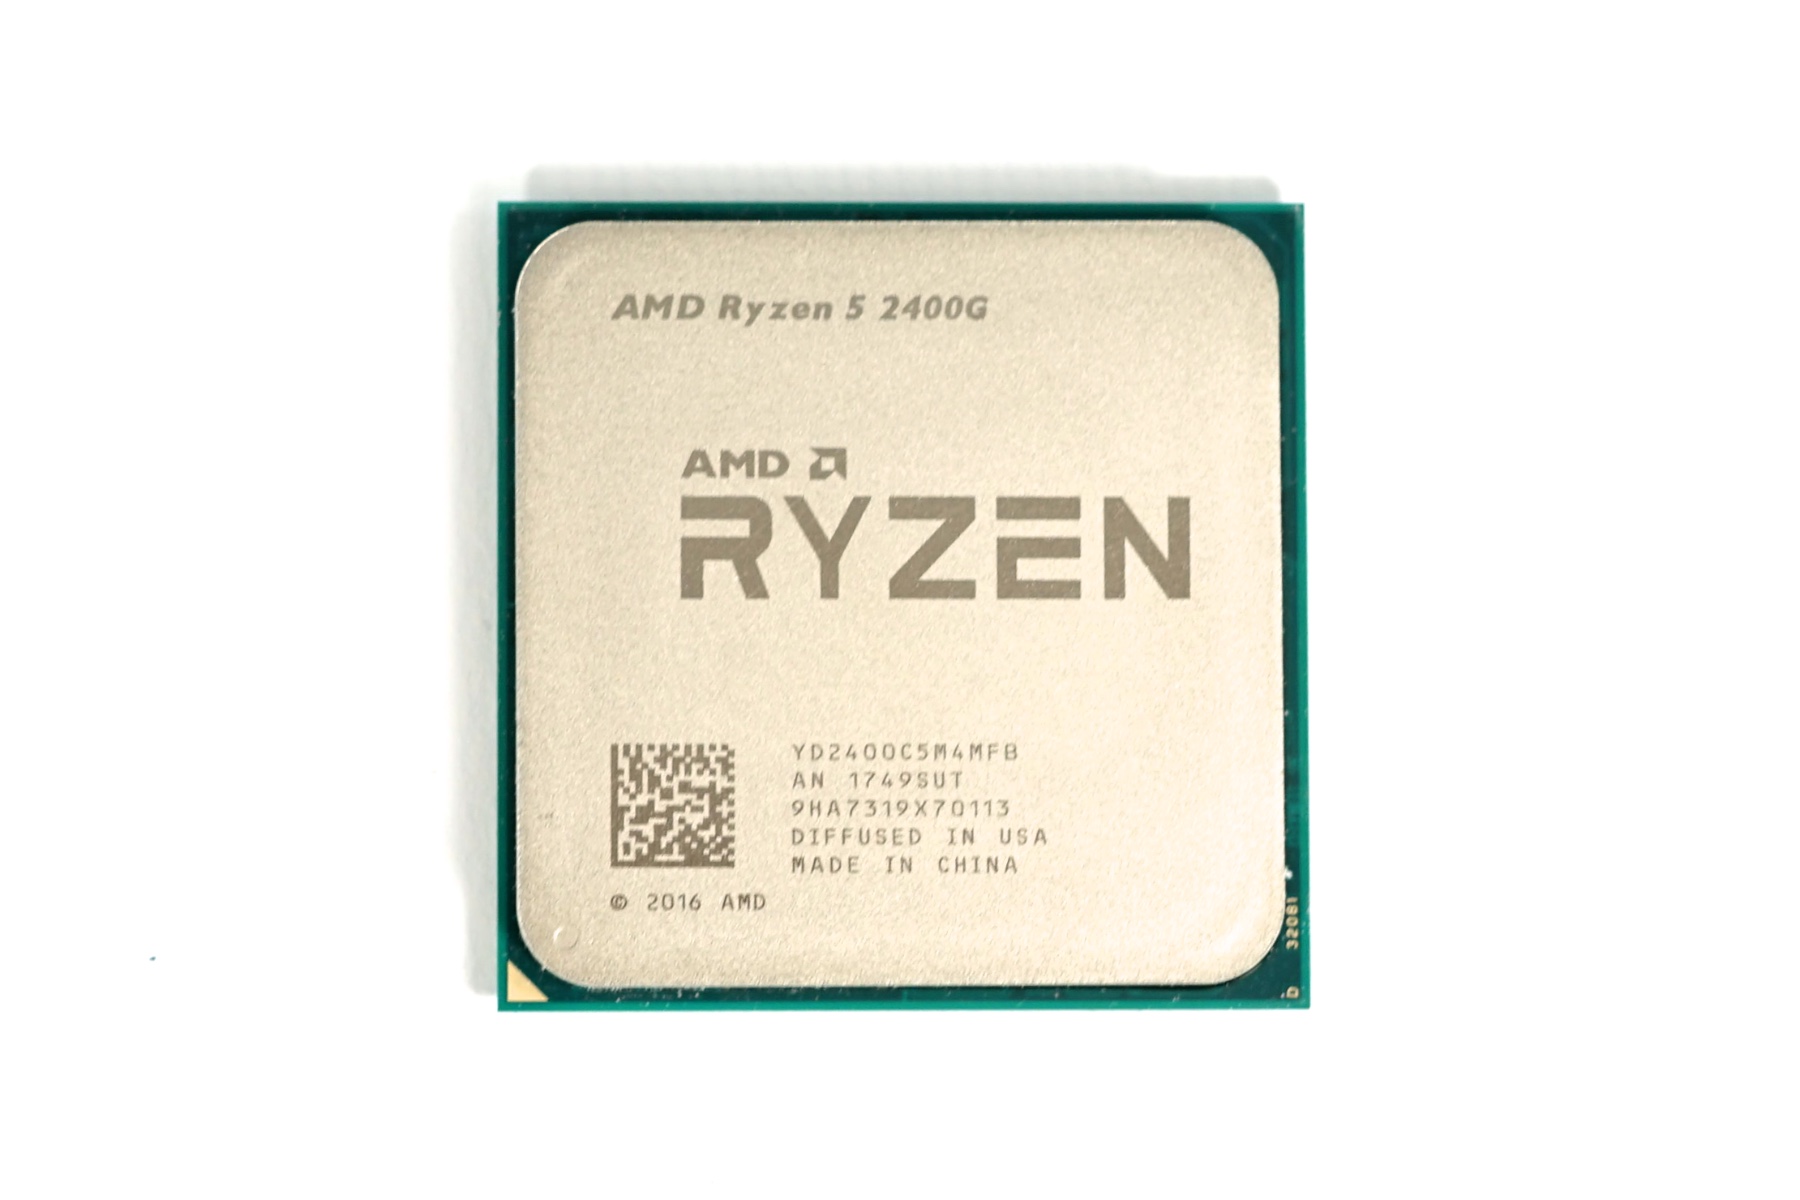 dobbelt Udholde gennemskueligt Ryzen 5 2400G and Ryzen 3 2200G in Review - NotebookCheck.net Reviews